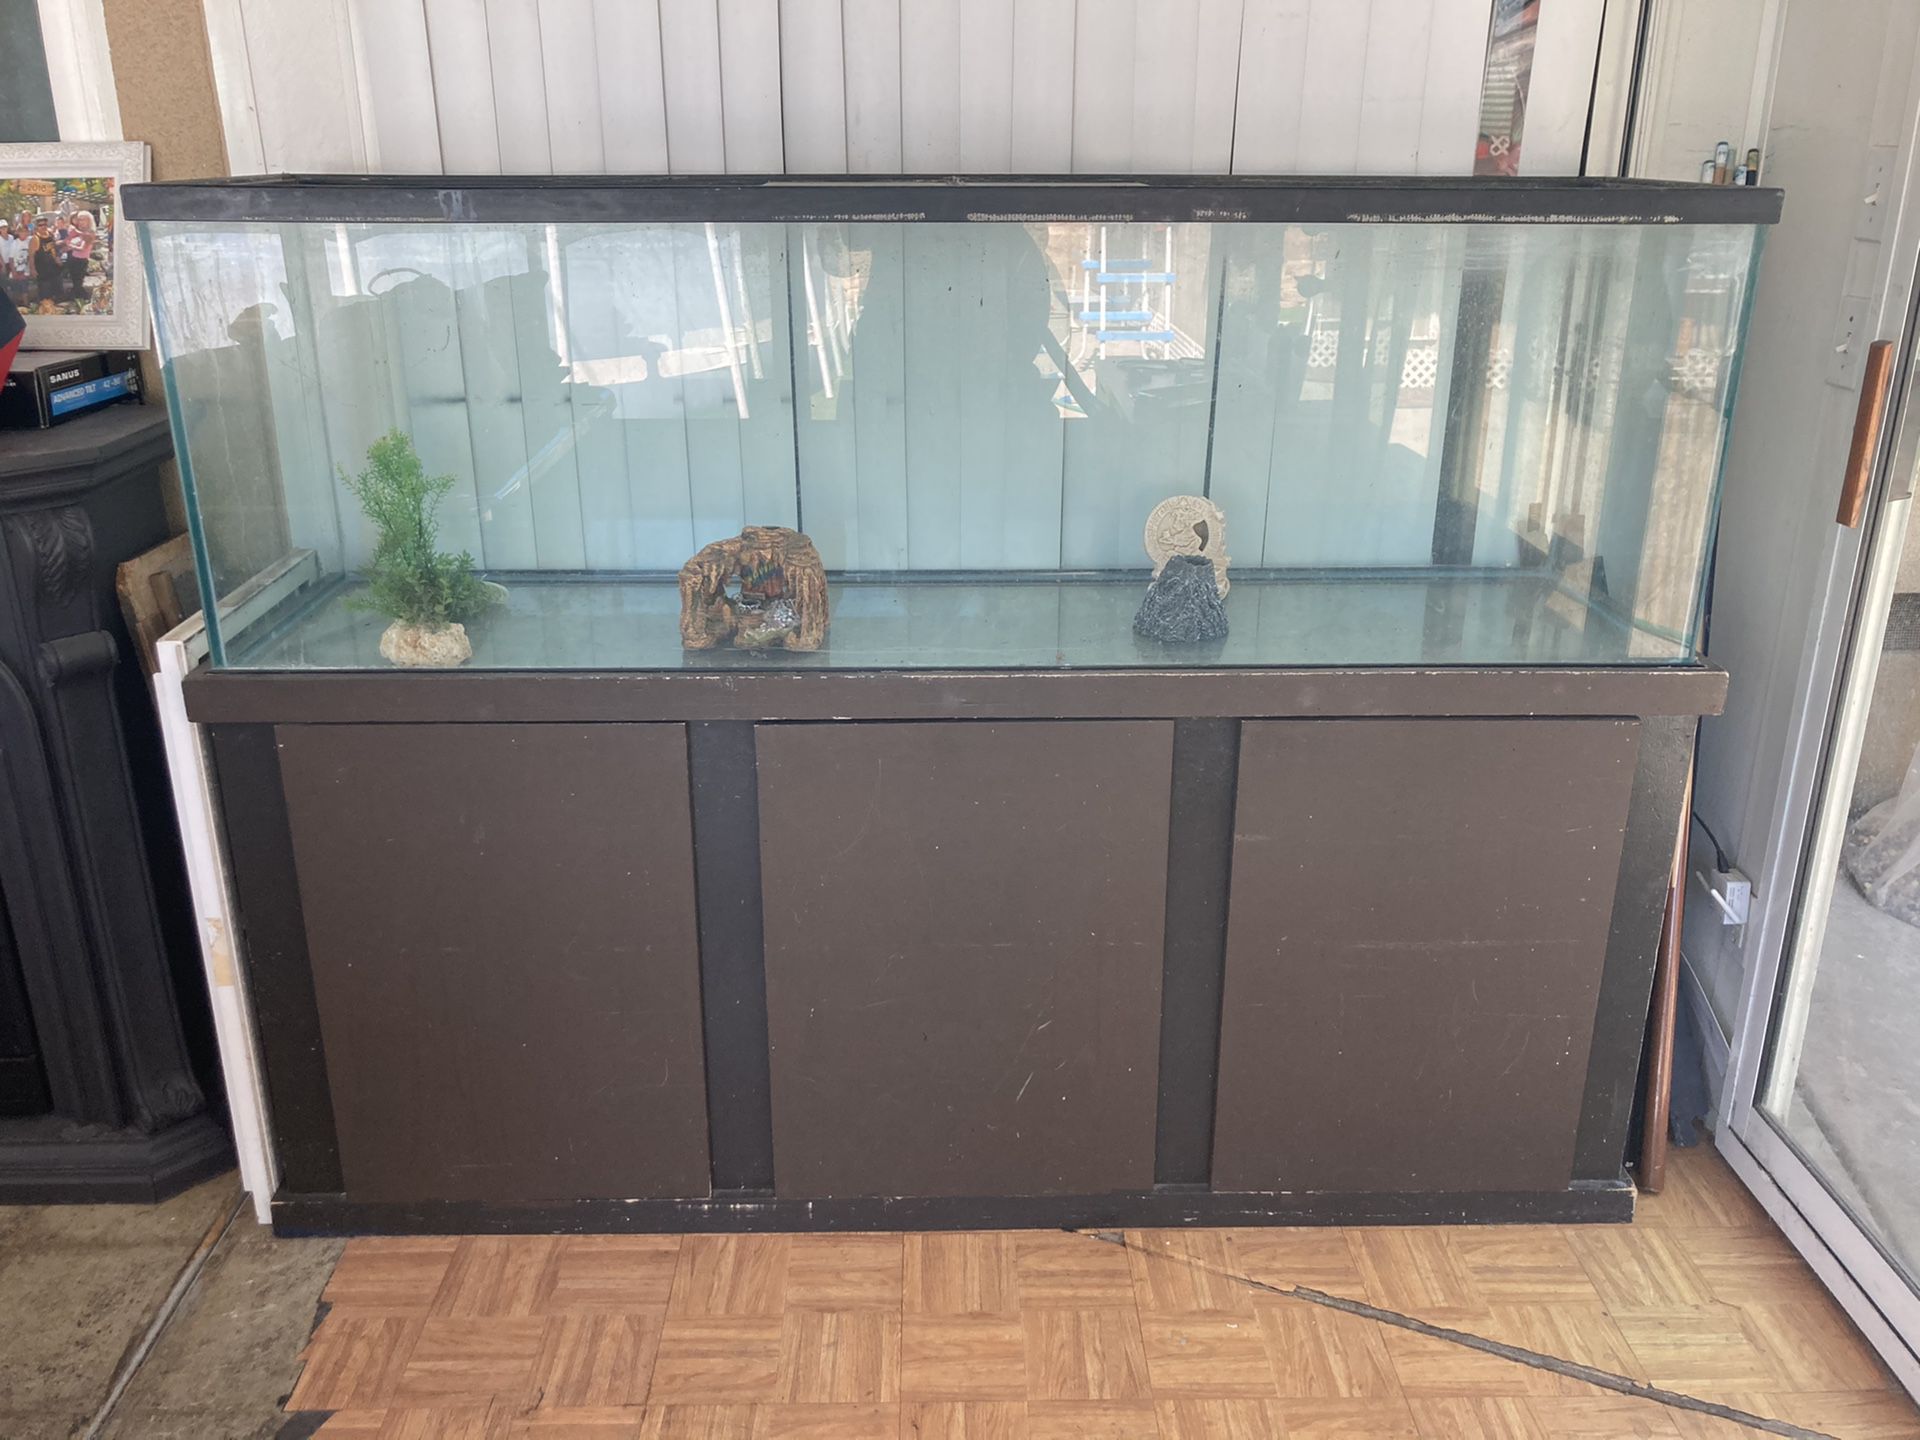 180g fish tank w/ rocks decor and fish Equipment